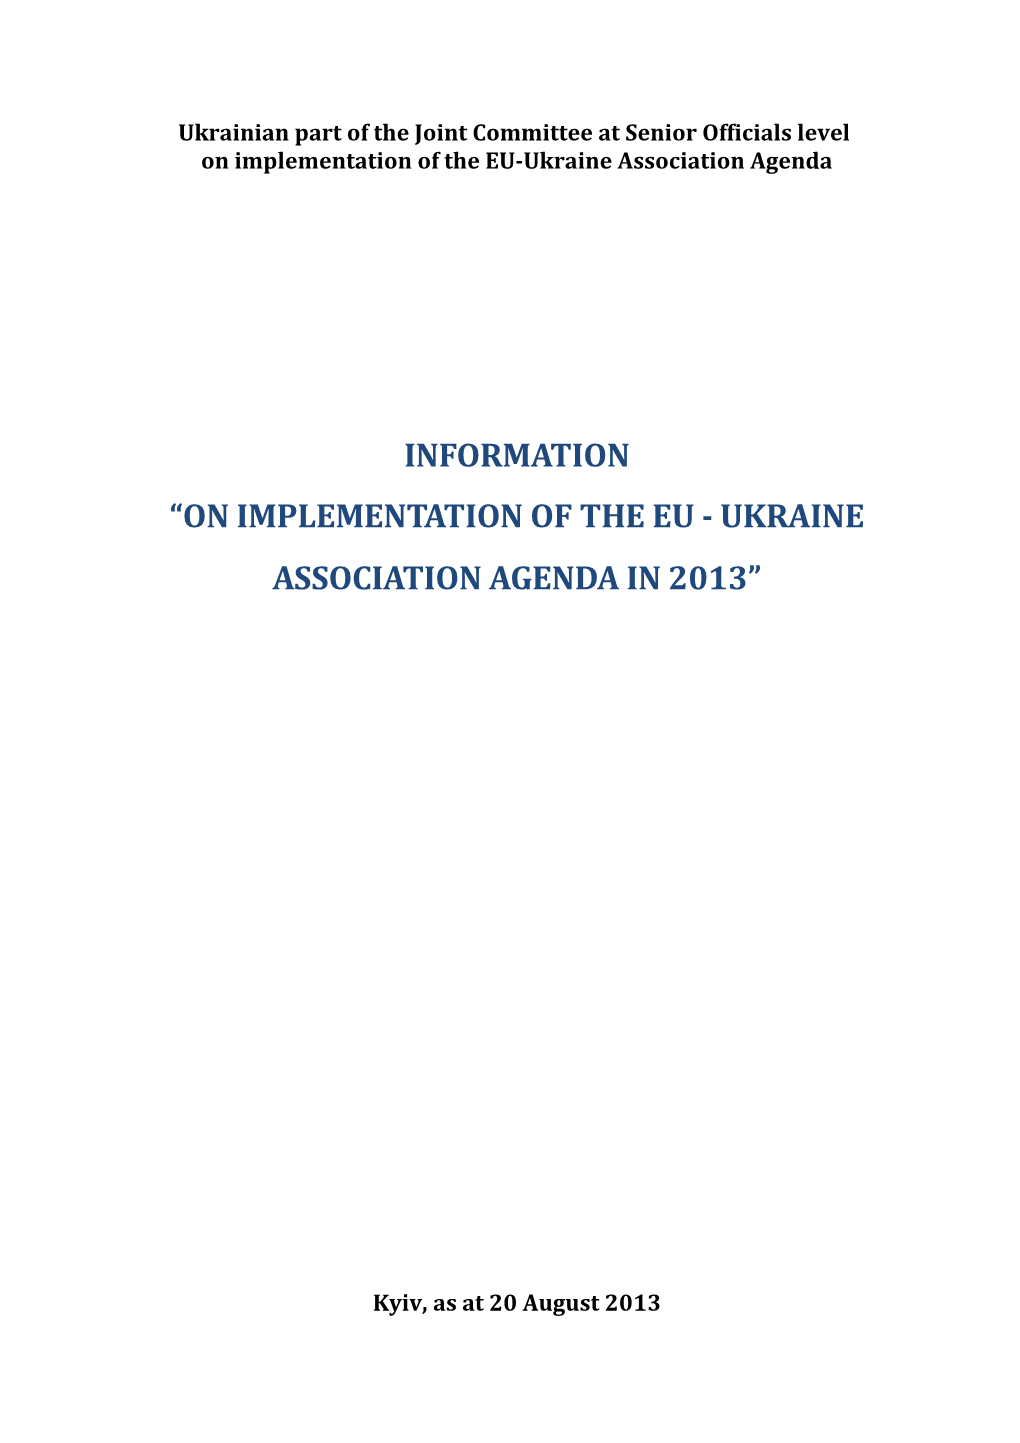 Information on Implementation of the EU Ukraine Association Agenda in 2013